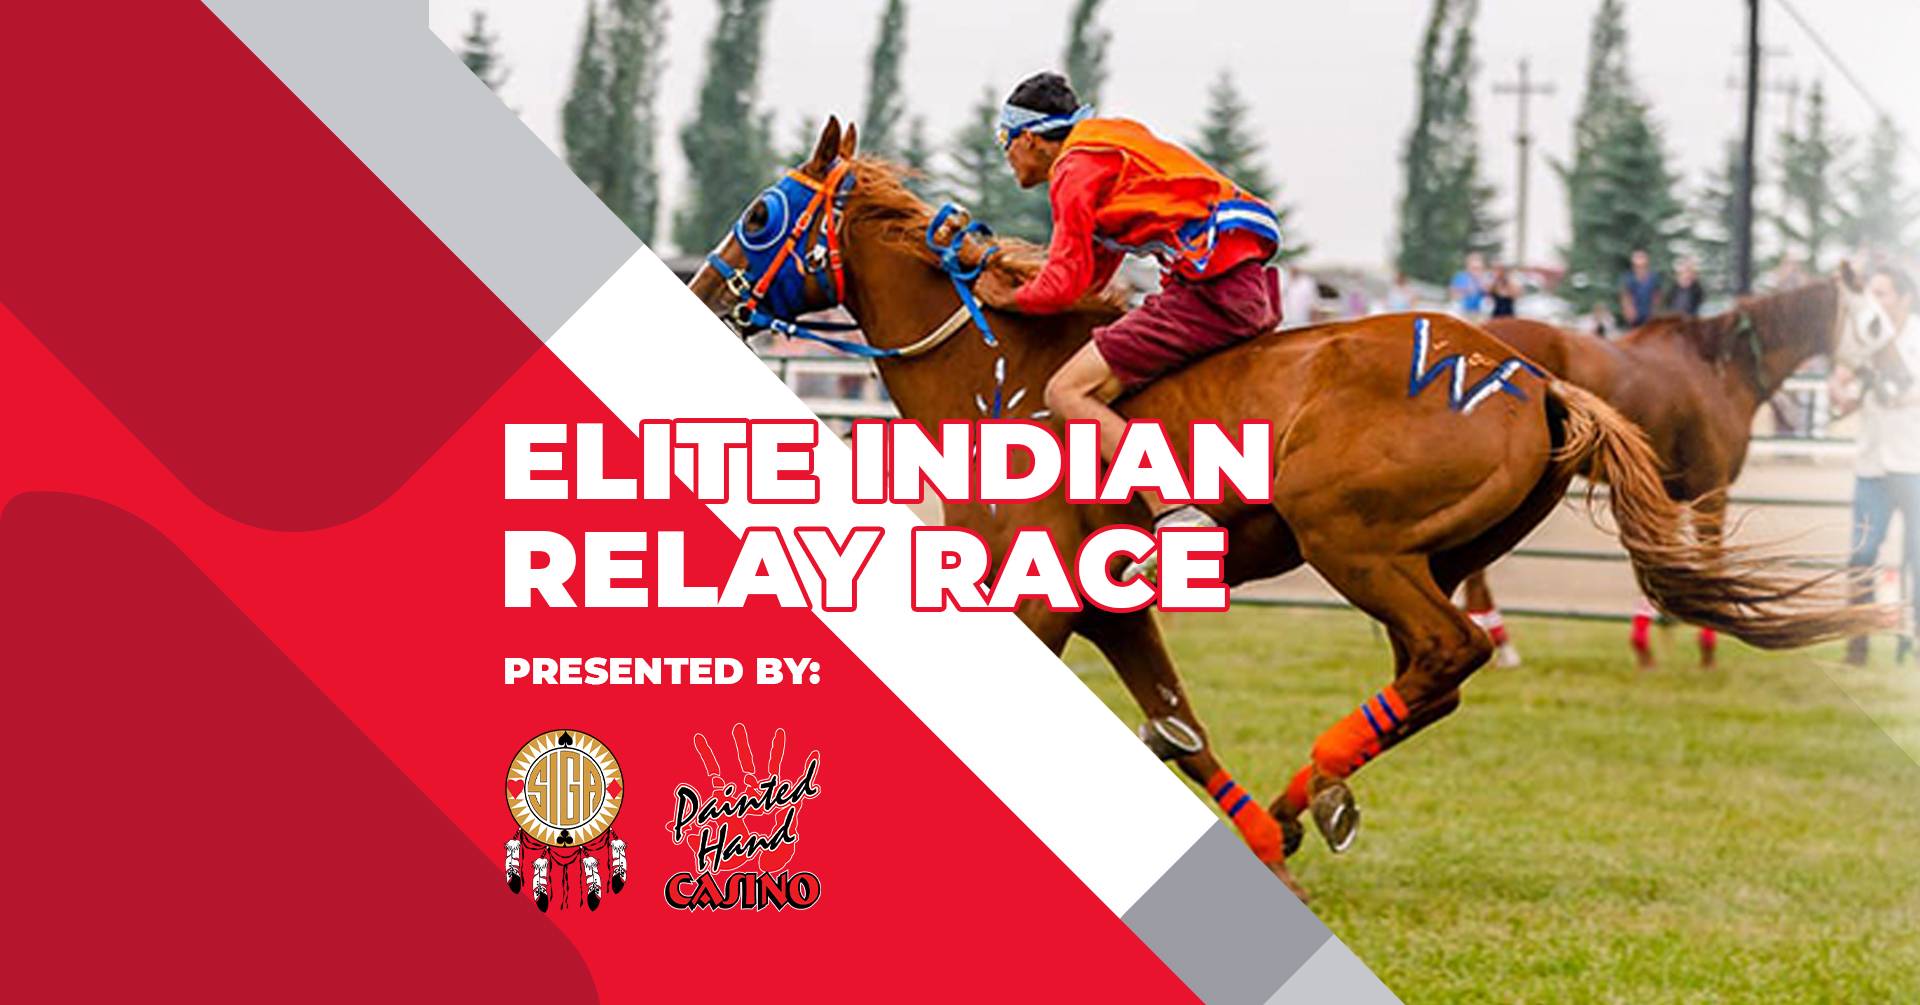 Elite Indian Relay Race